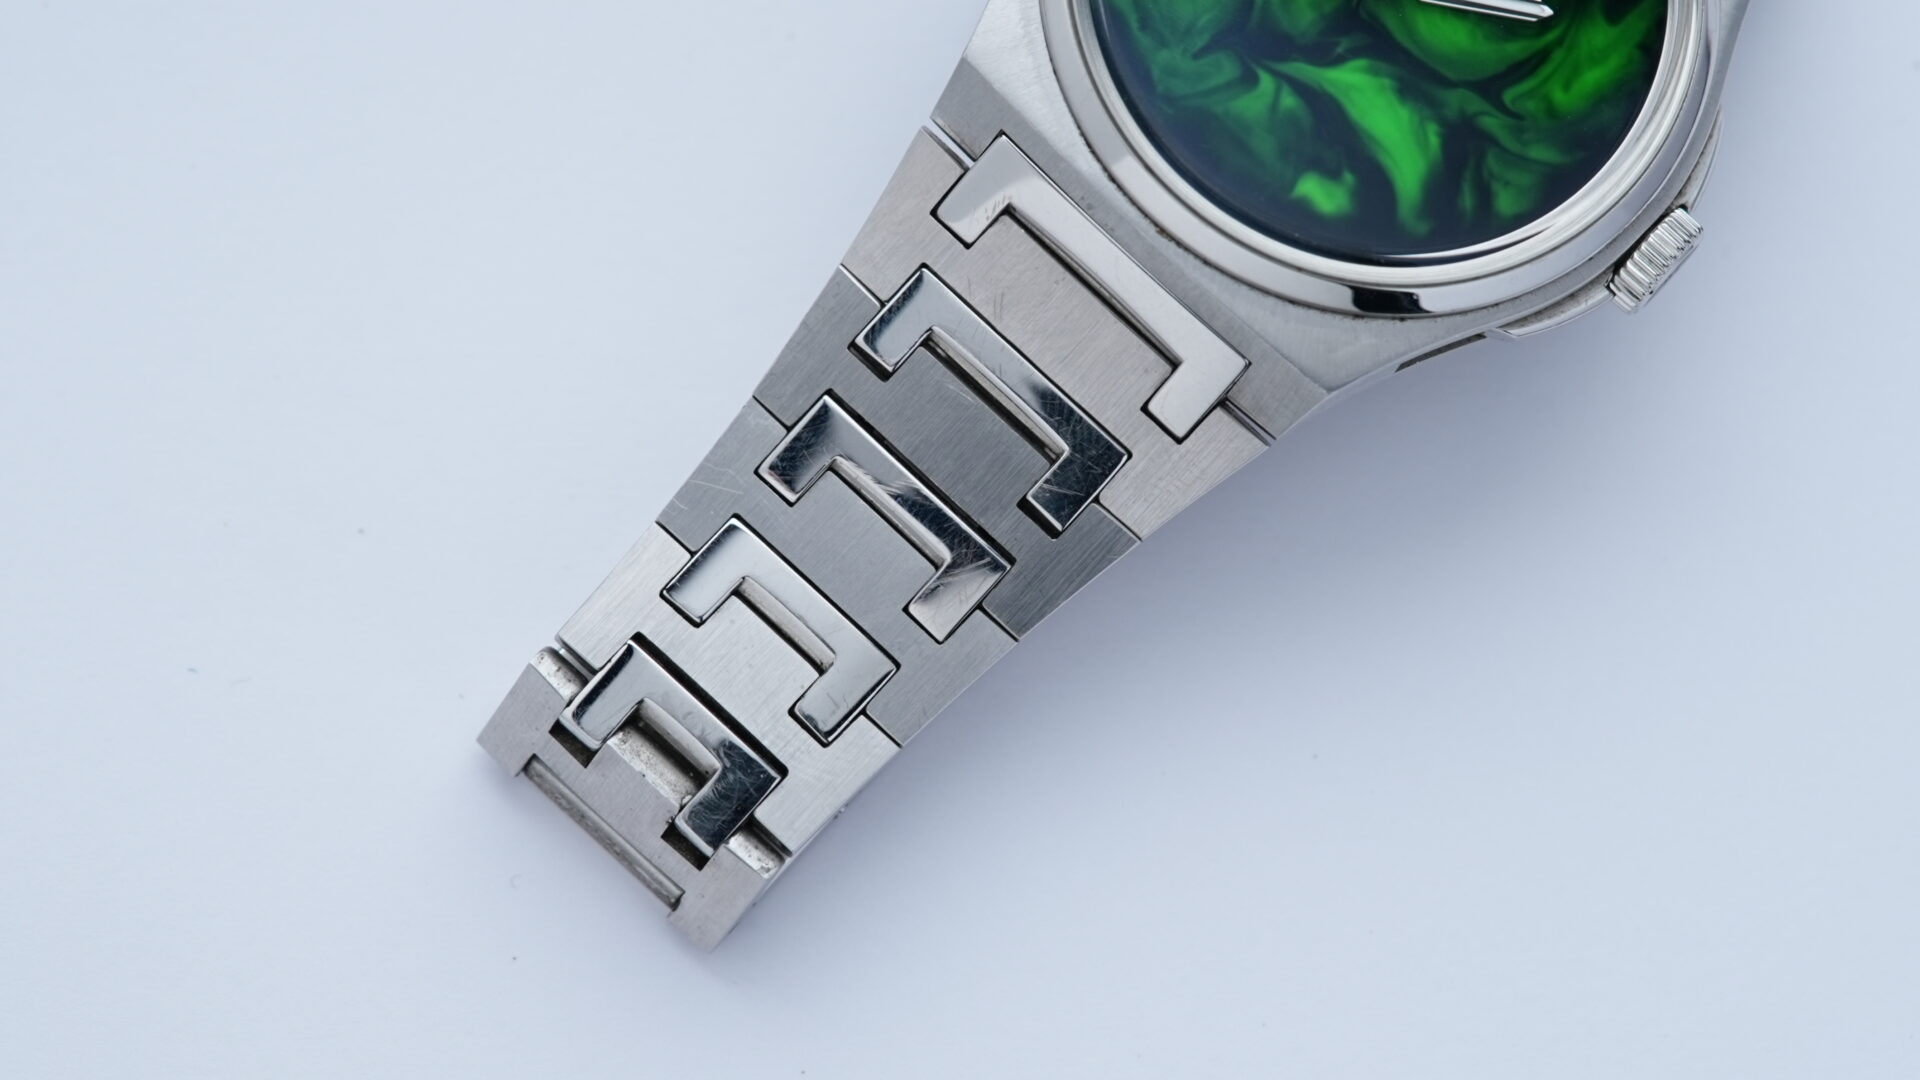 Czapek ANTARCTIQUE SPECIAL EDITION Emerald Iceberg Limited Edition watch bracelet.